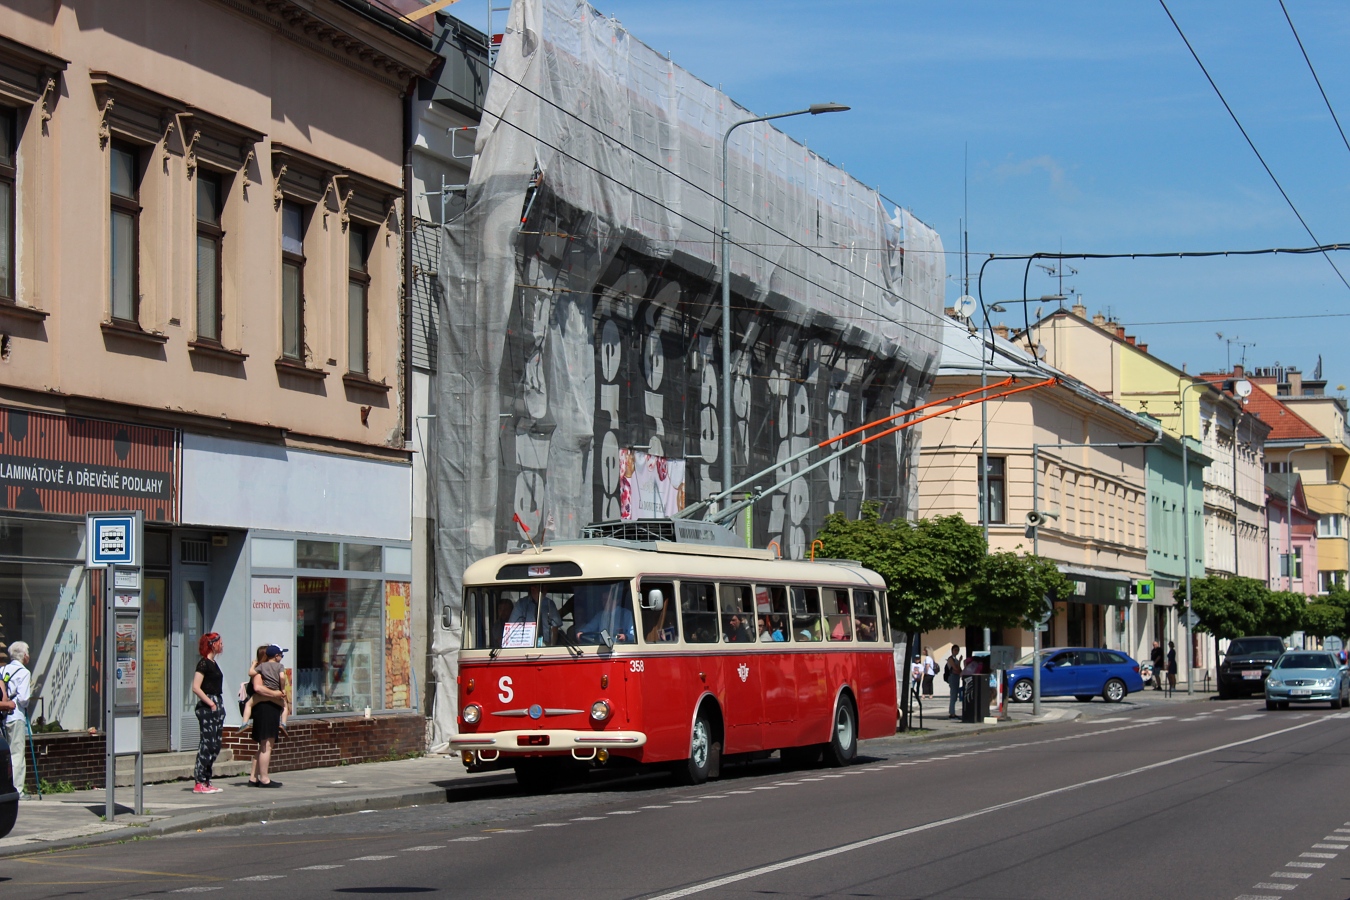 Пардубице, Škoda 9TrHT28 № 358; Пардубице — Празднование 70-летия троллейбусного движения в Пардубице